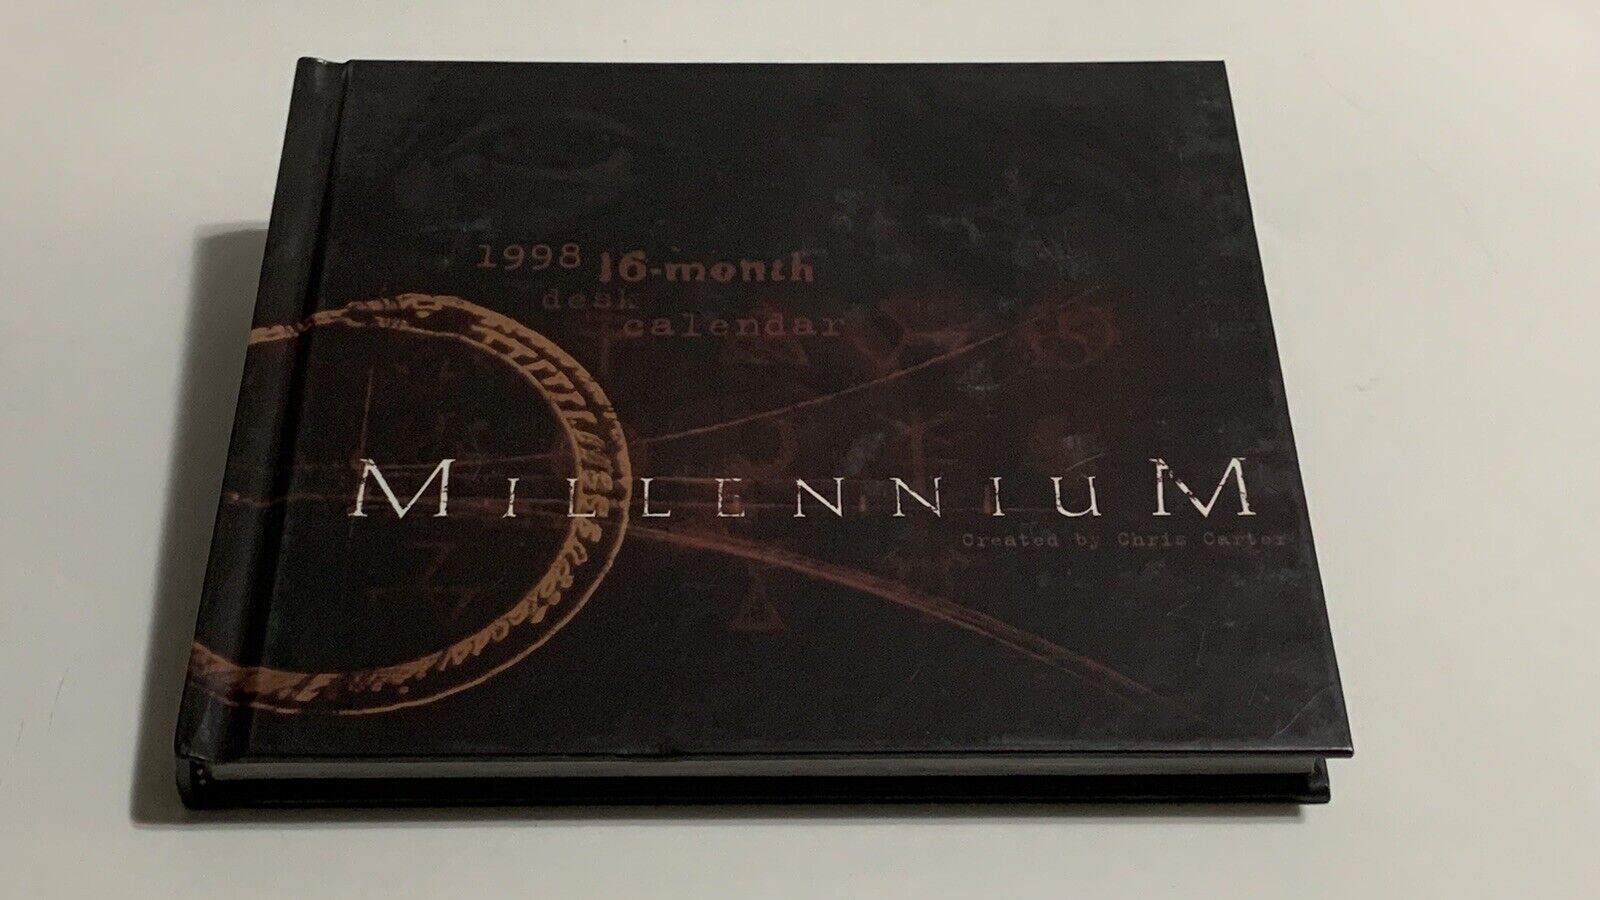 Millennium Series Chris Carter Created (X Files) 16 Mth Hardcover Calendar Art